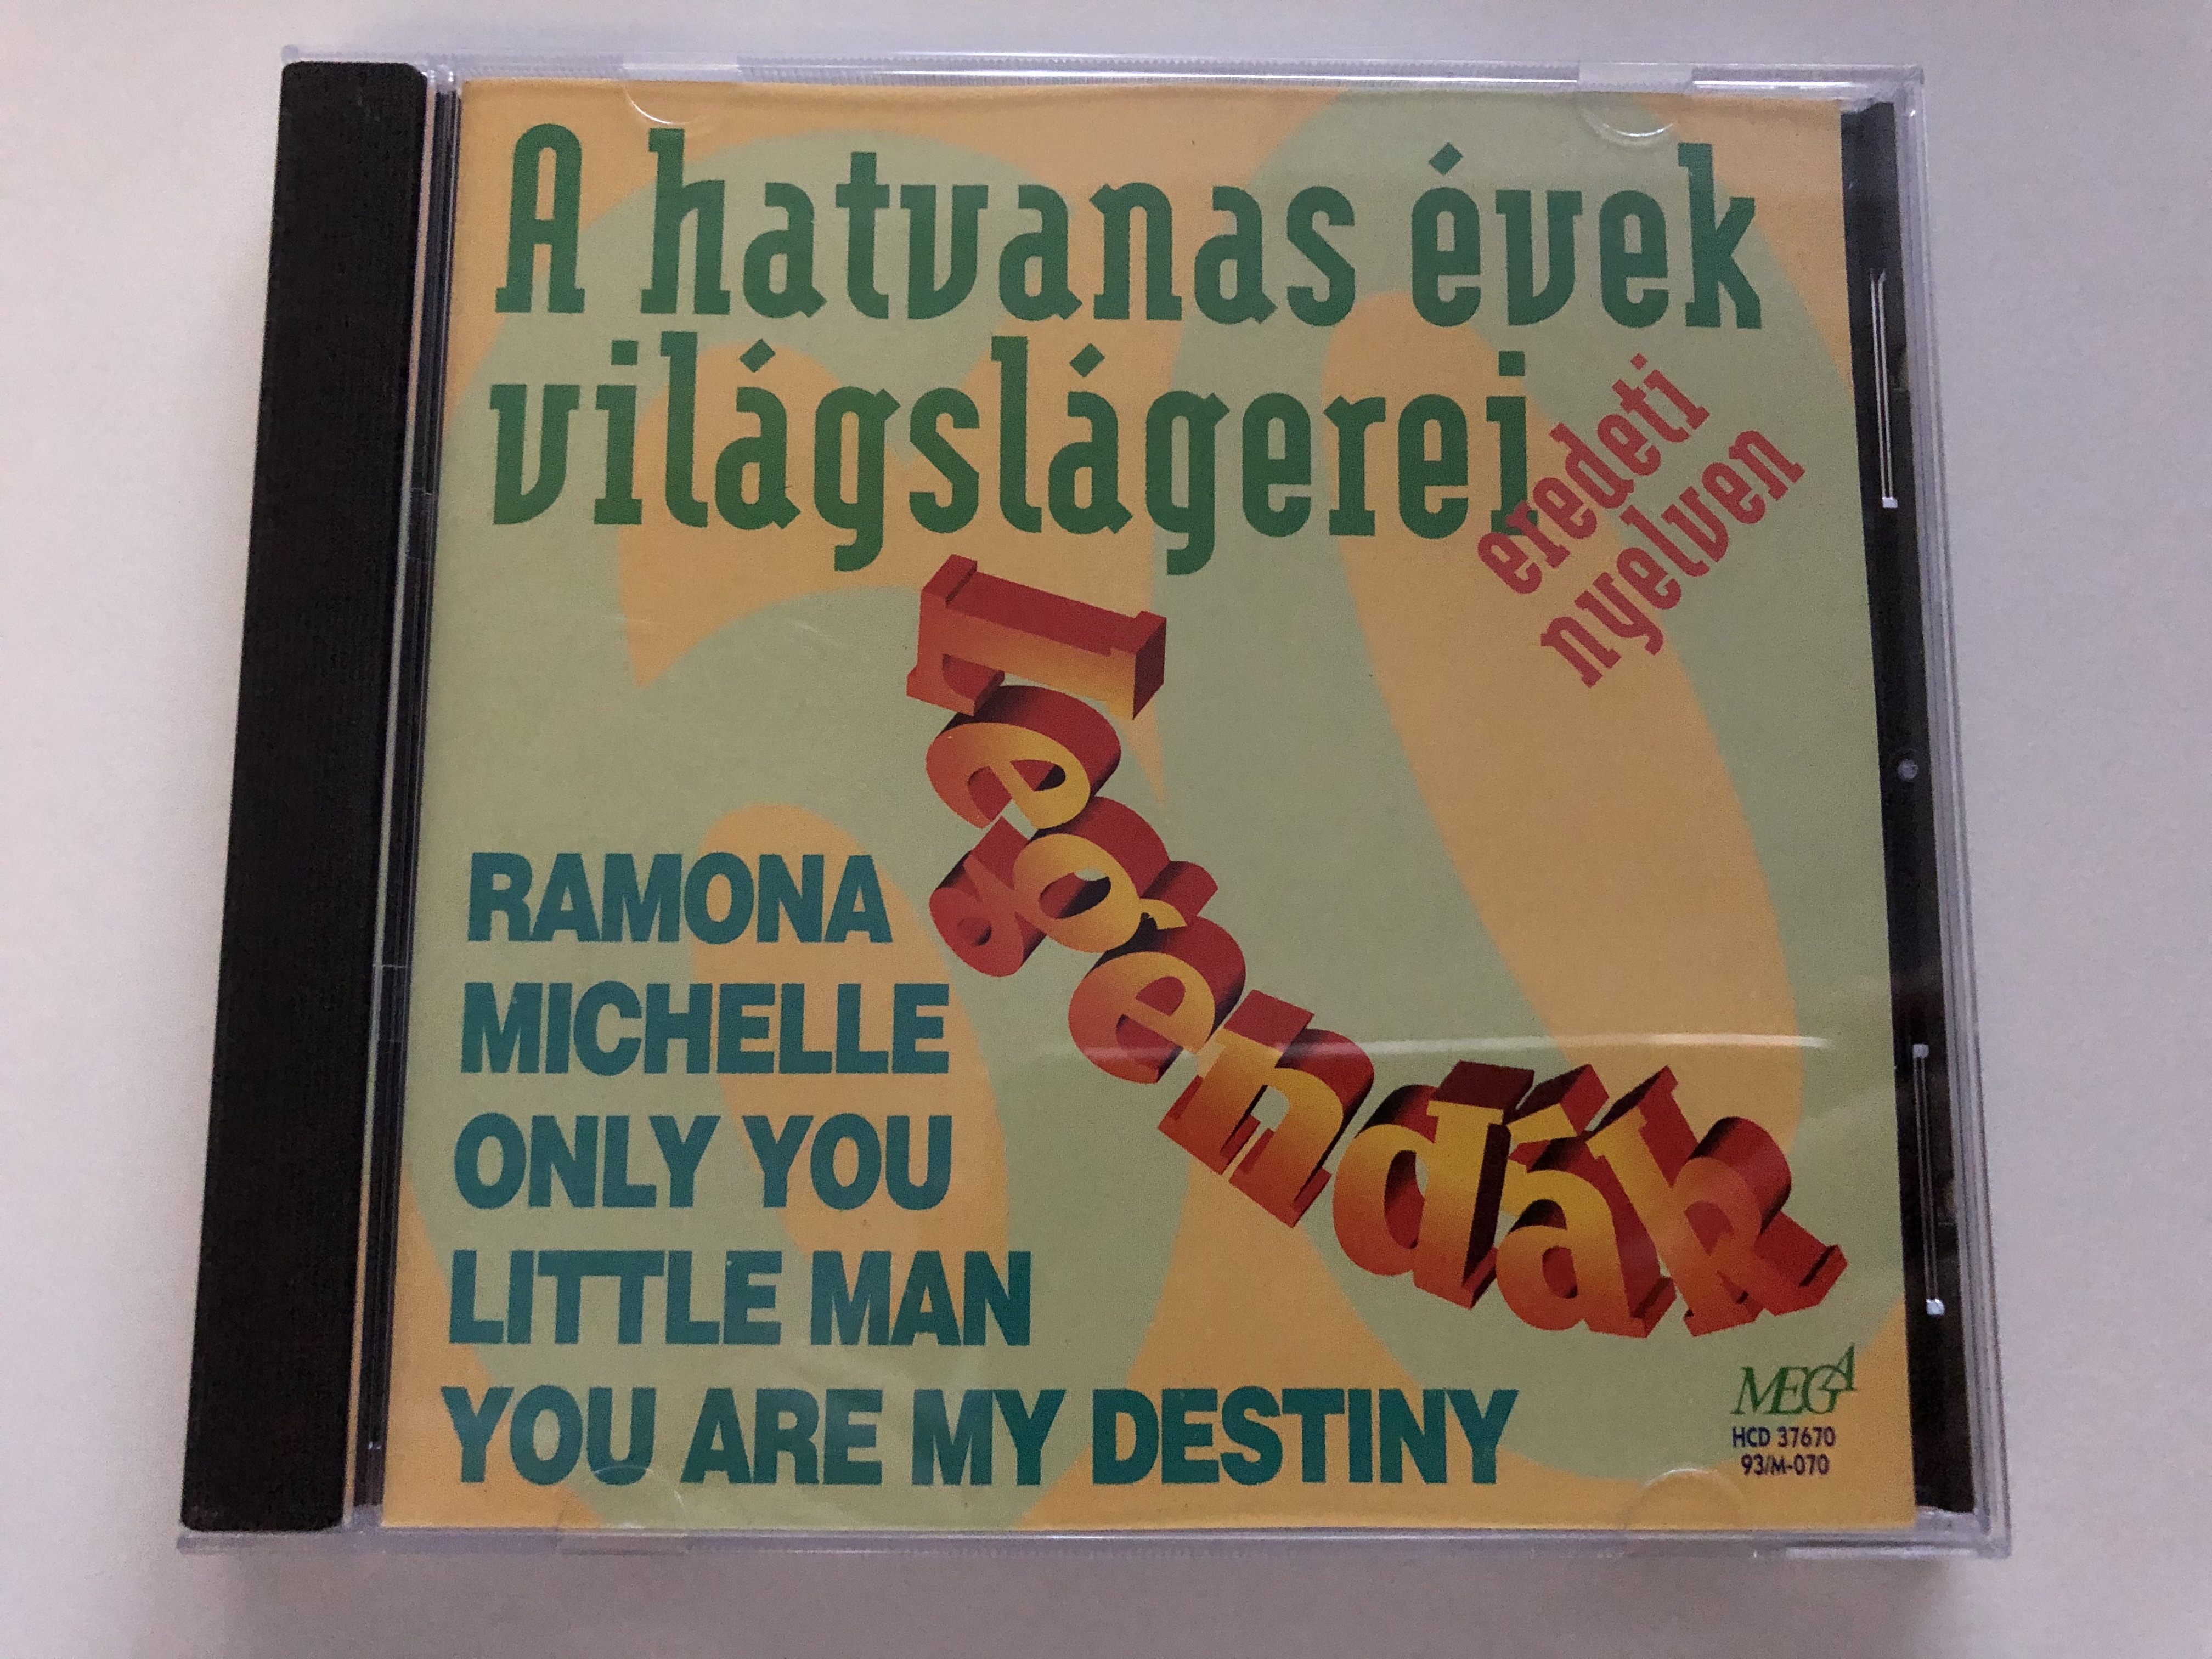 a-hatvanas-evek-vilagslagerei-eredeti-nyelven-ramona-michelle-only-you-little-man-you-are-my-destiny-mega-audio-cd-1993-hcd-37670-93m-070-3-.jpg